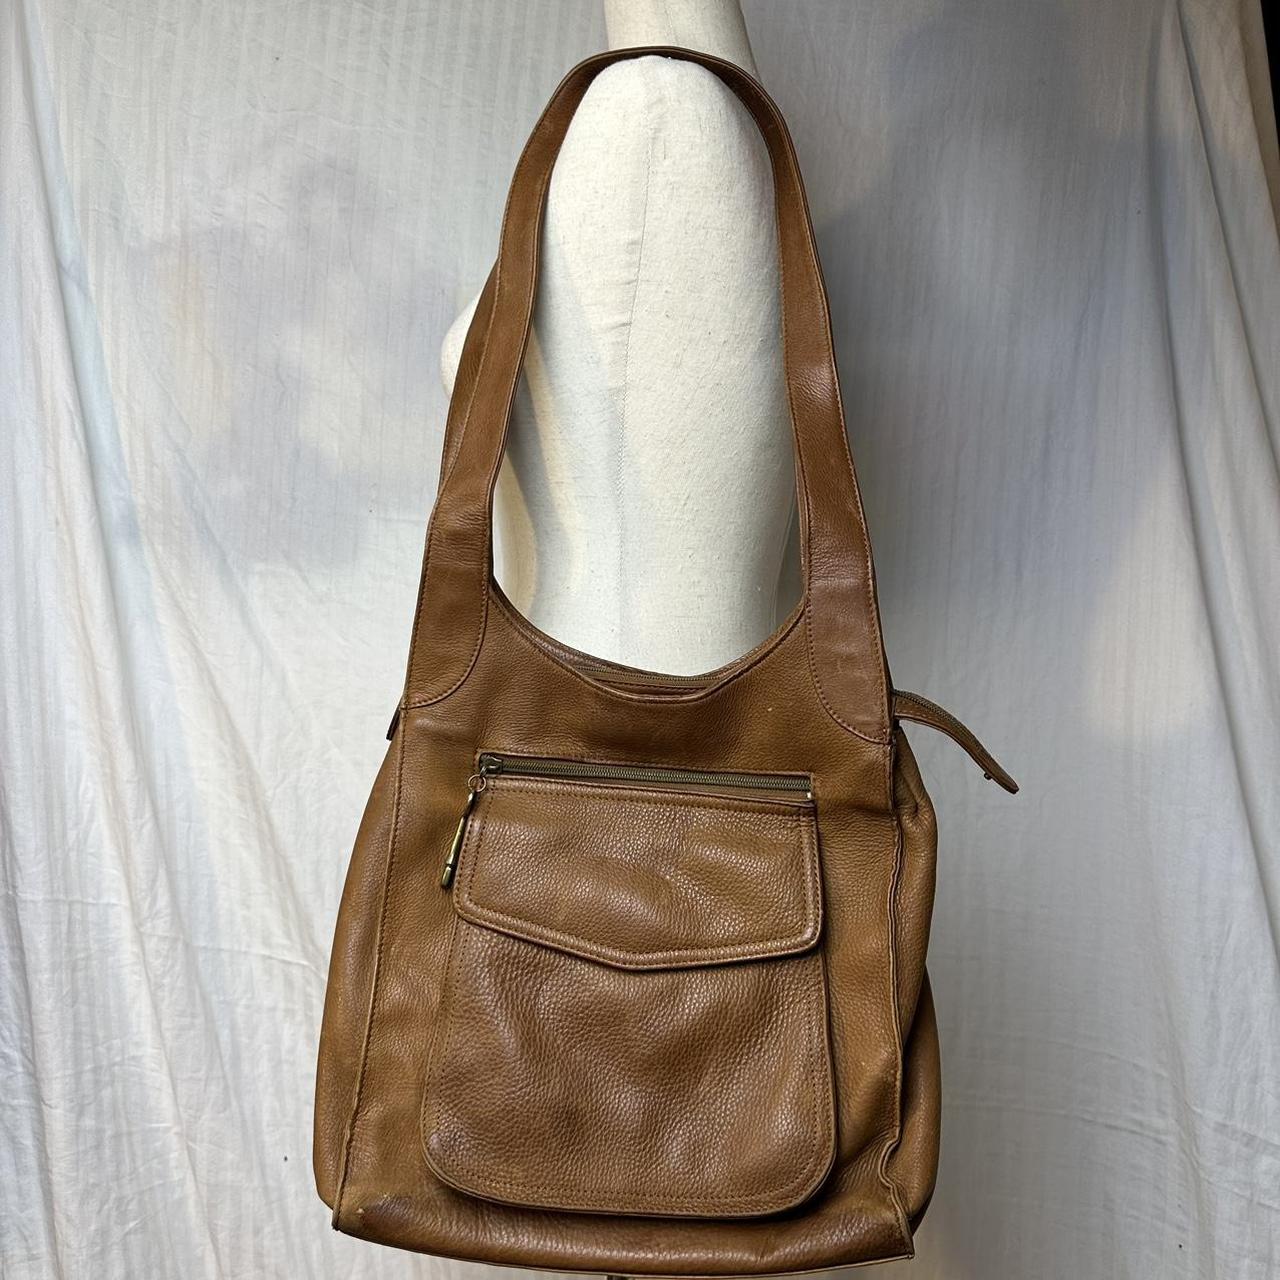 Fossil Purse Handbag Brown Leather Zip Top 75082 Satchel Shoulder Bag 13